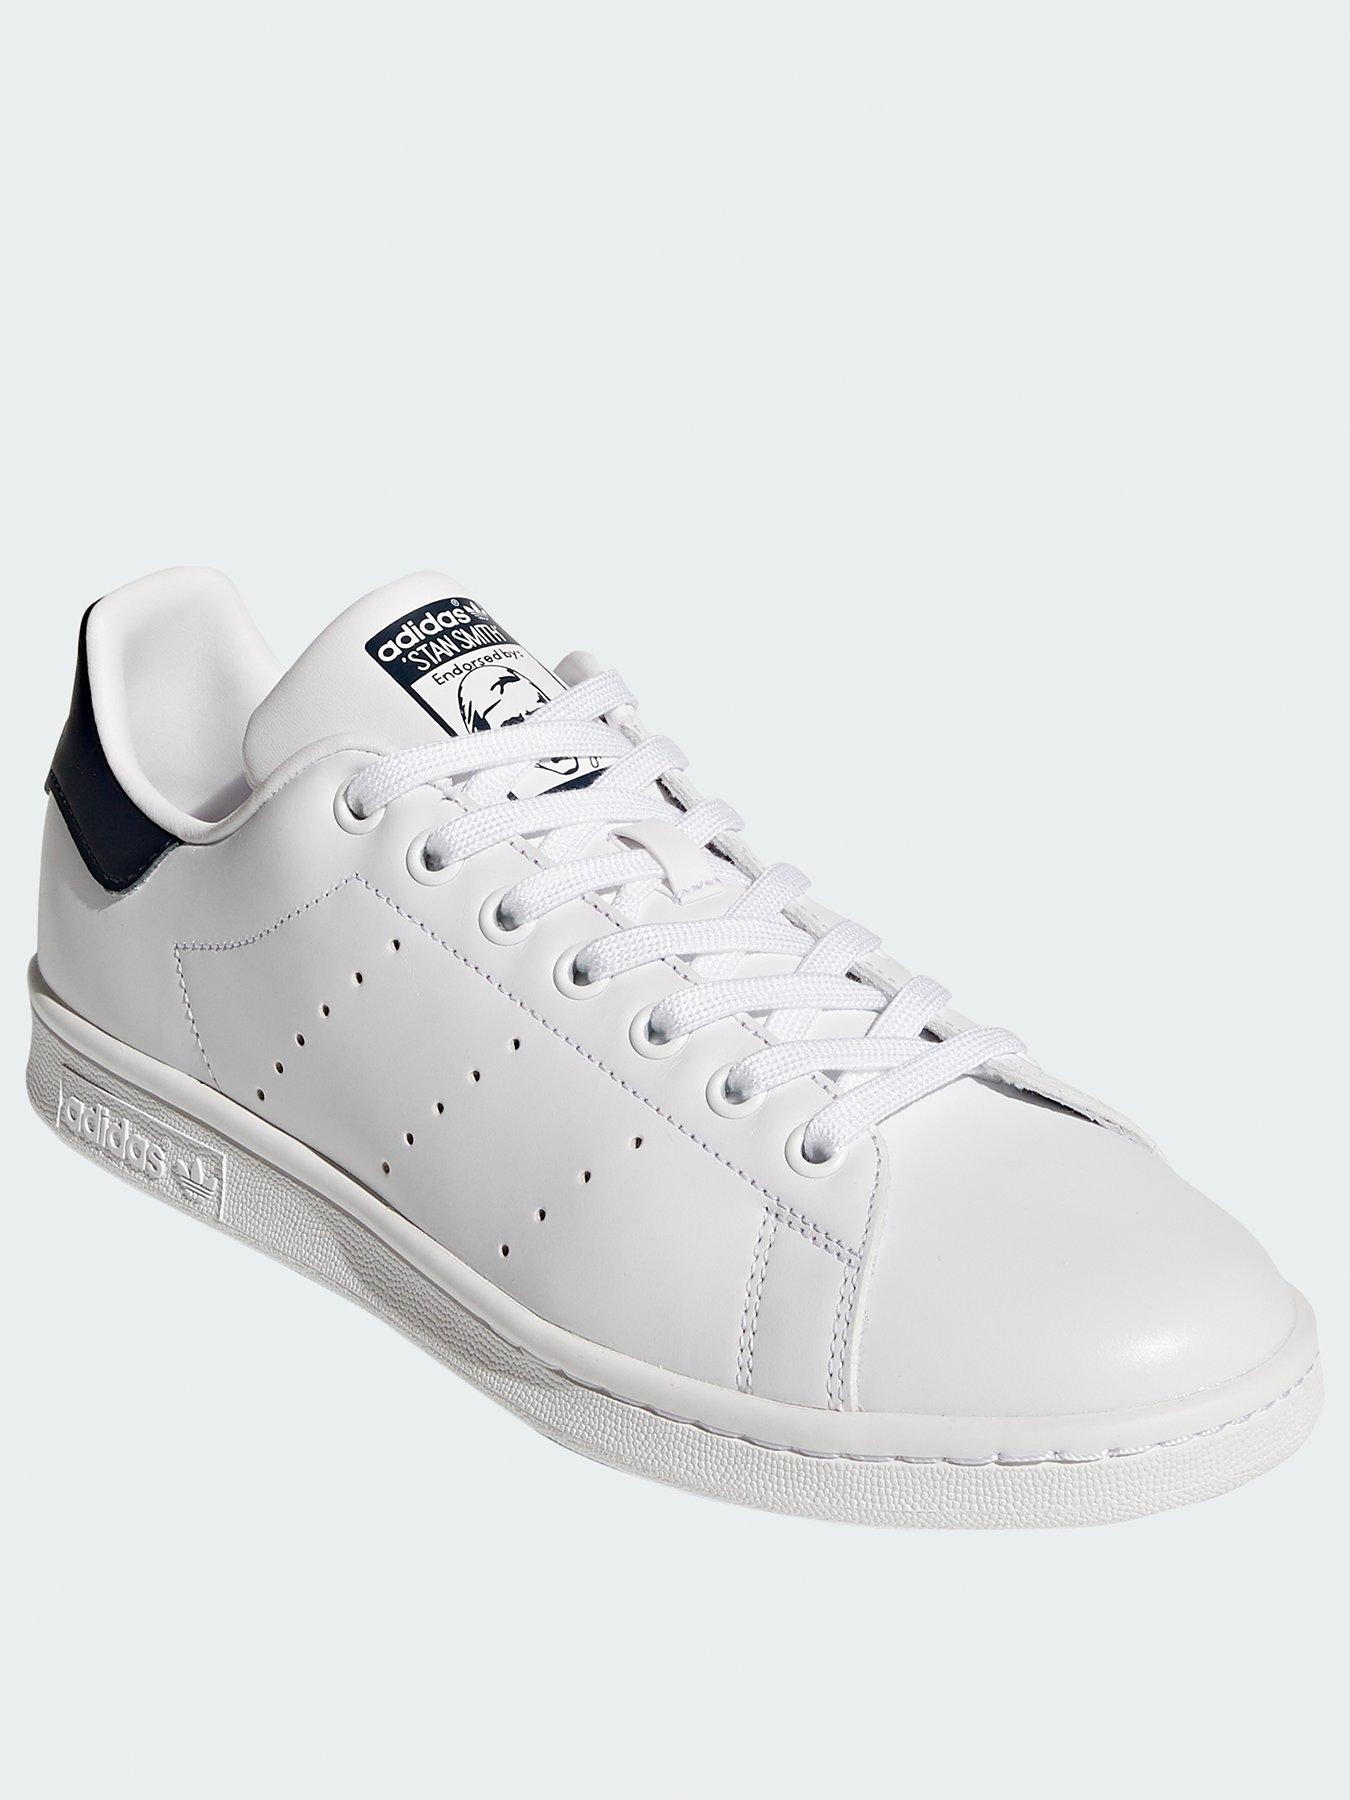 adidas navy and white